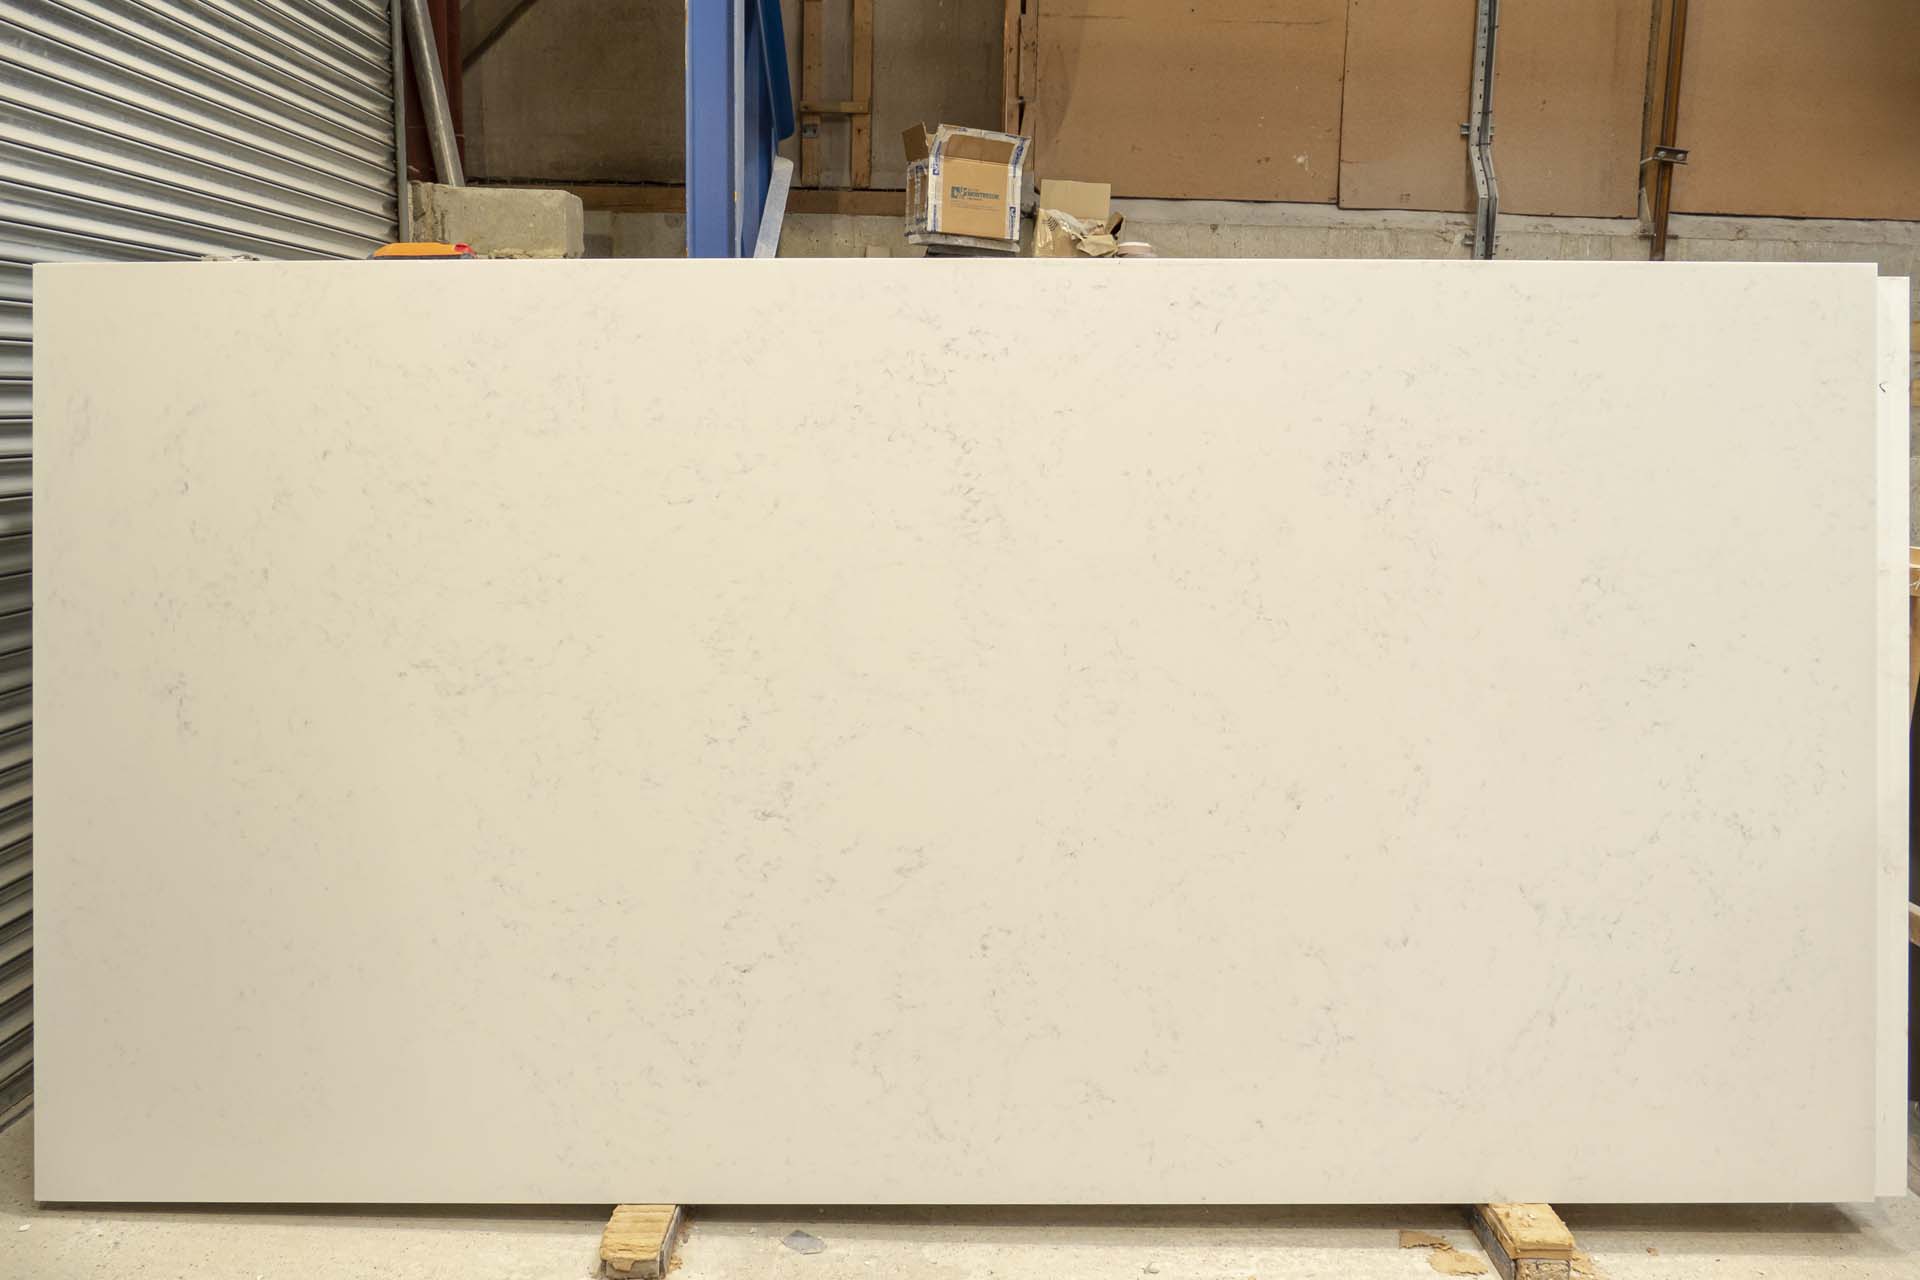 AG Carrara quartz for kitchen worktops